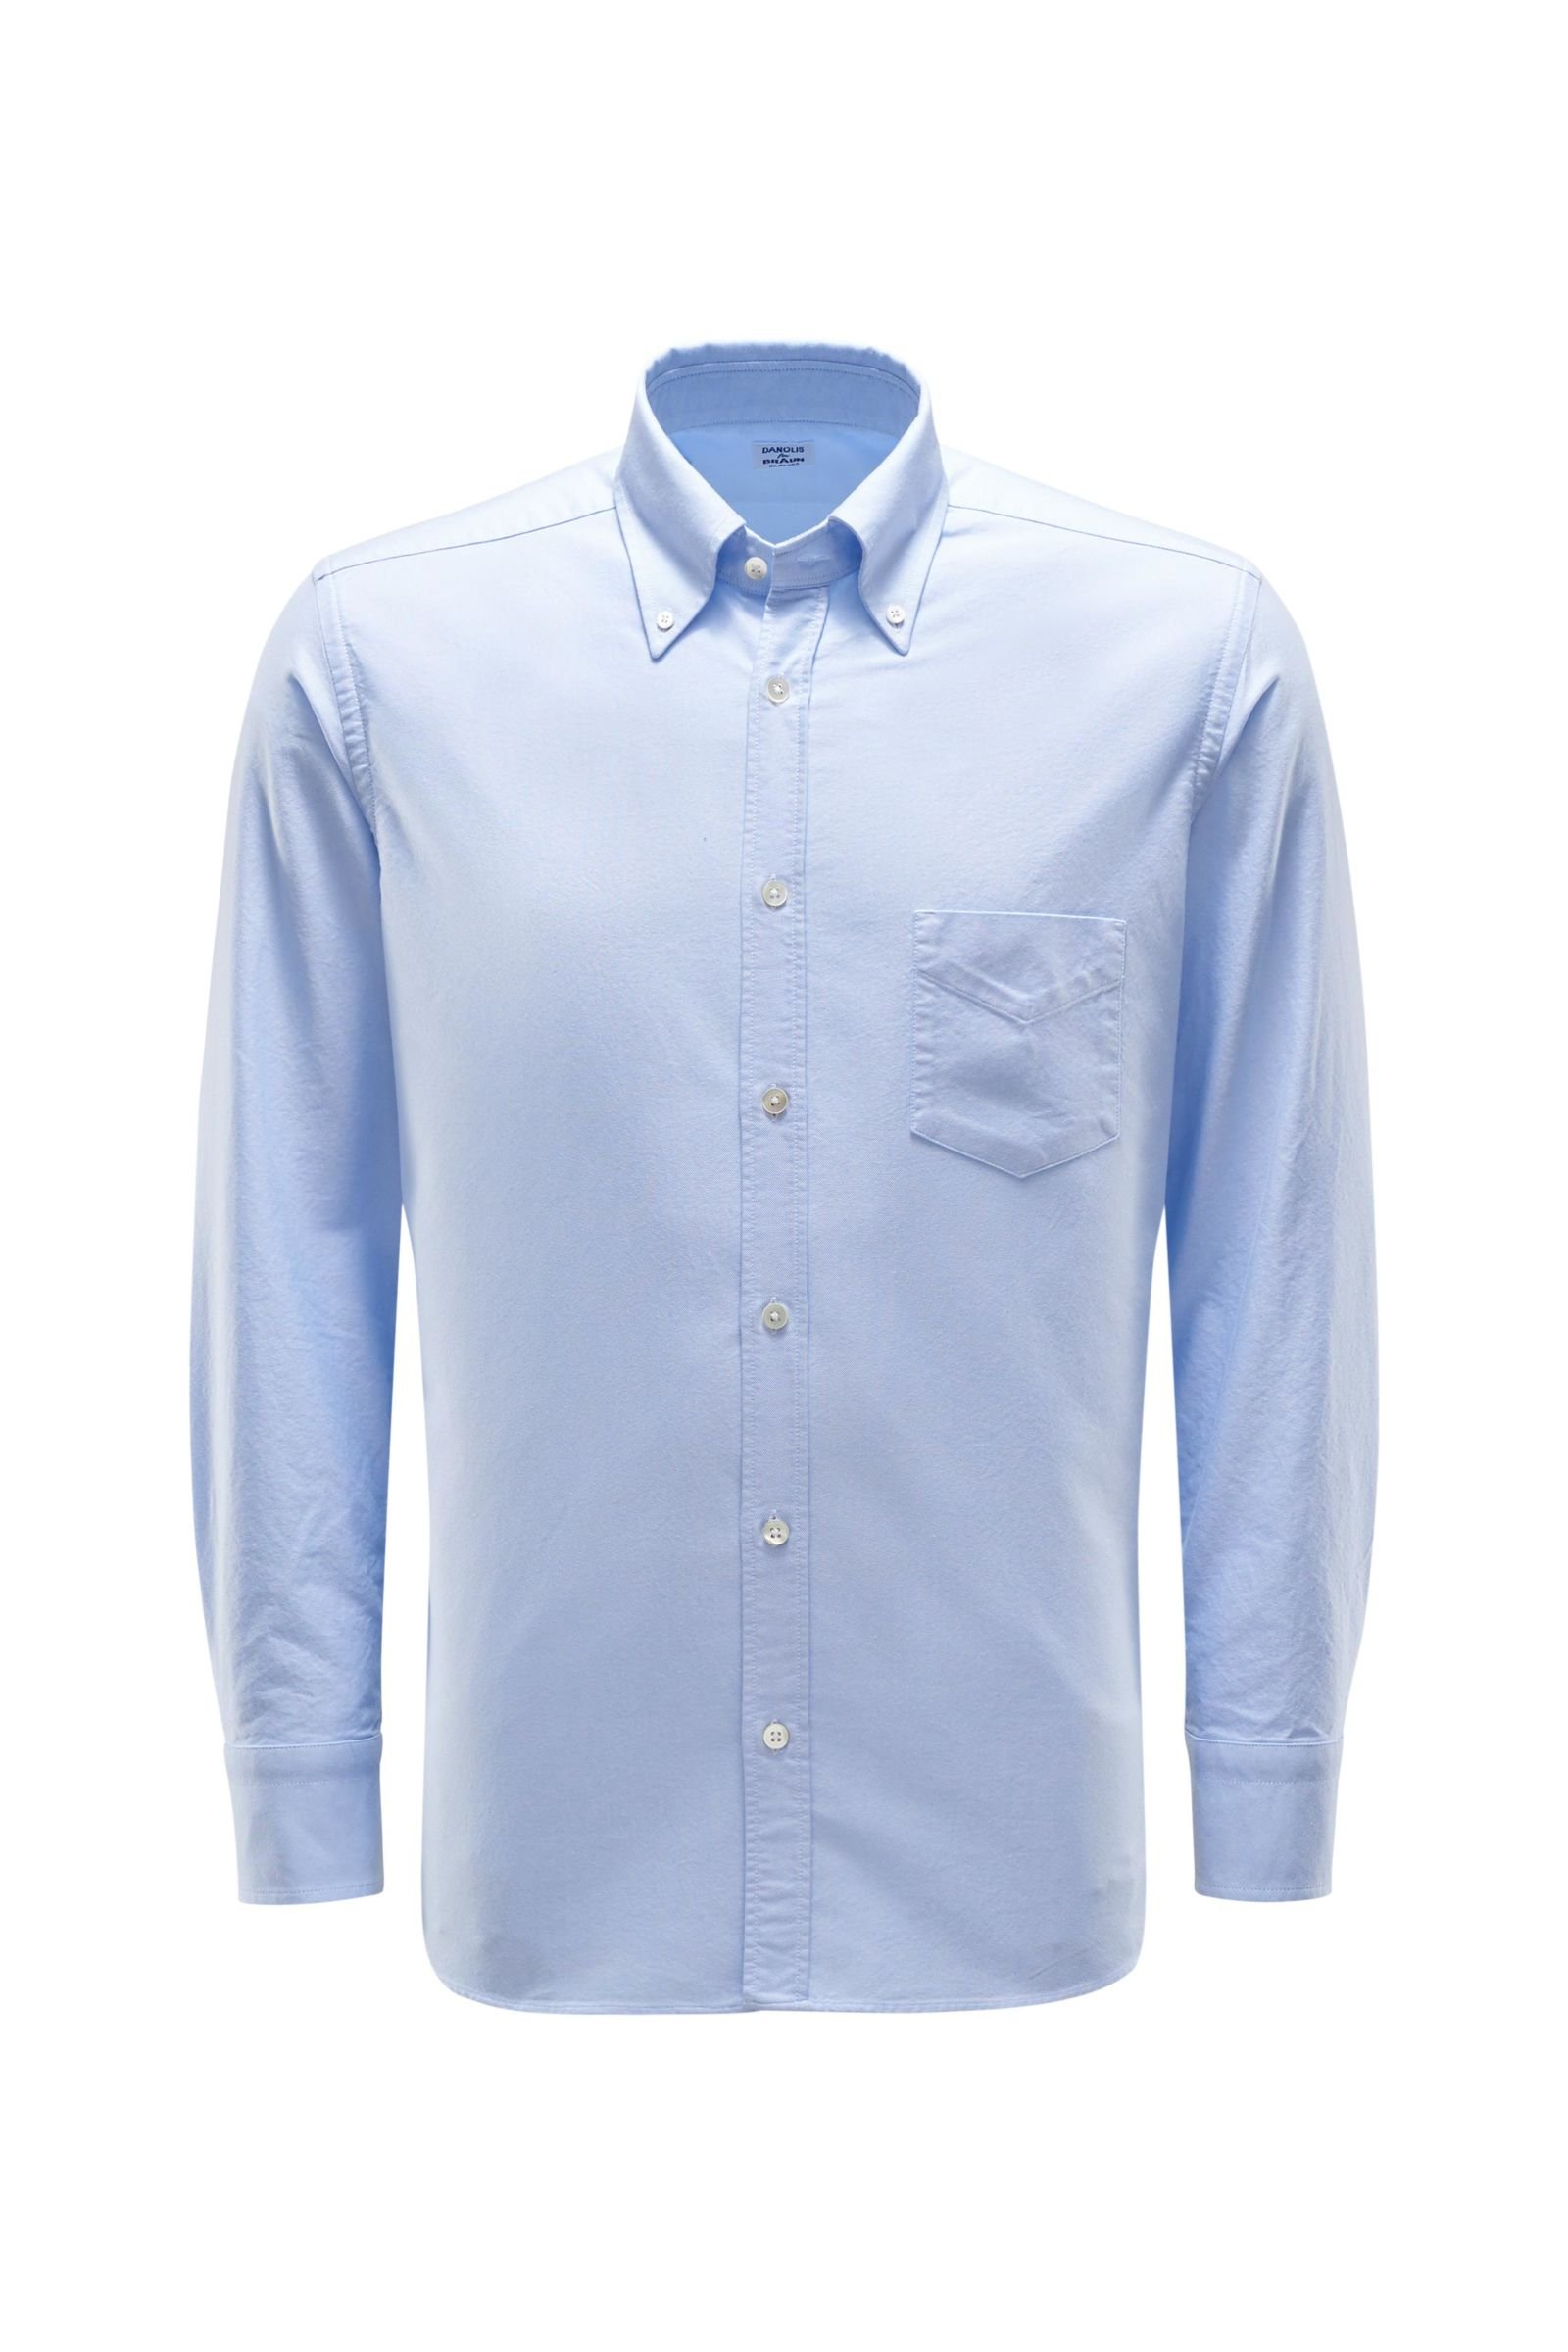 Oxford shirt button-down collar pastel blue